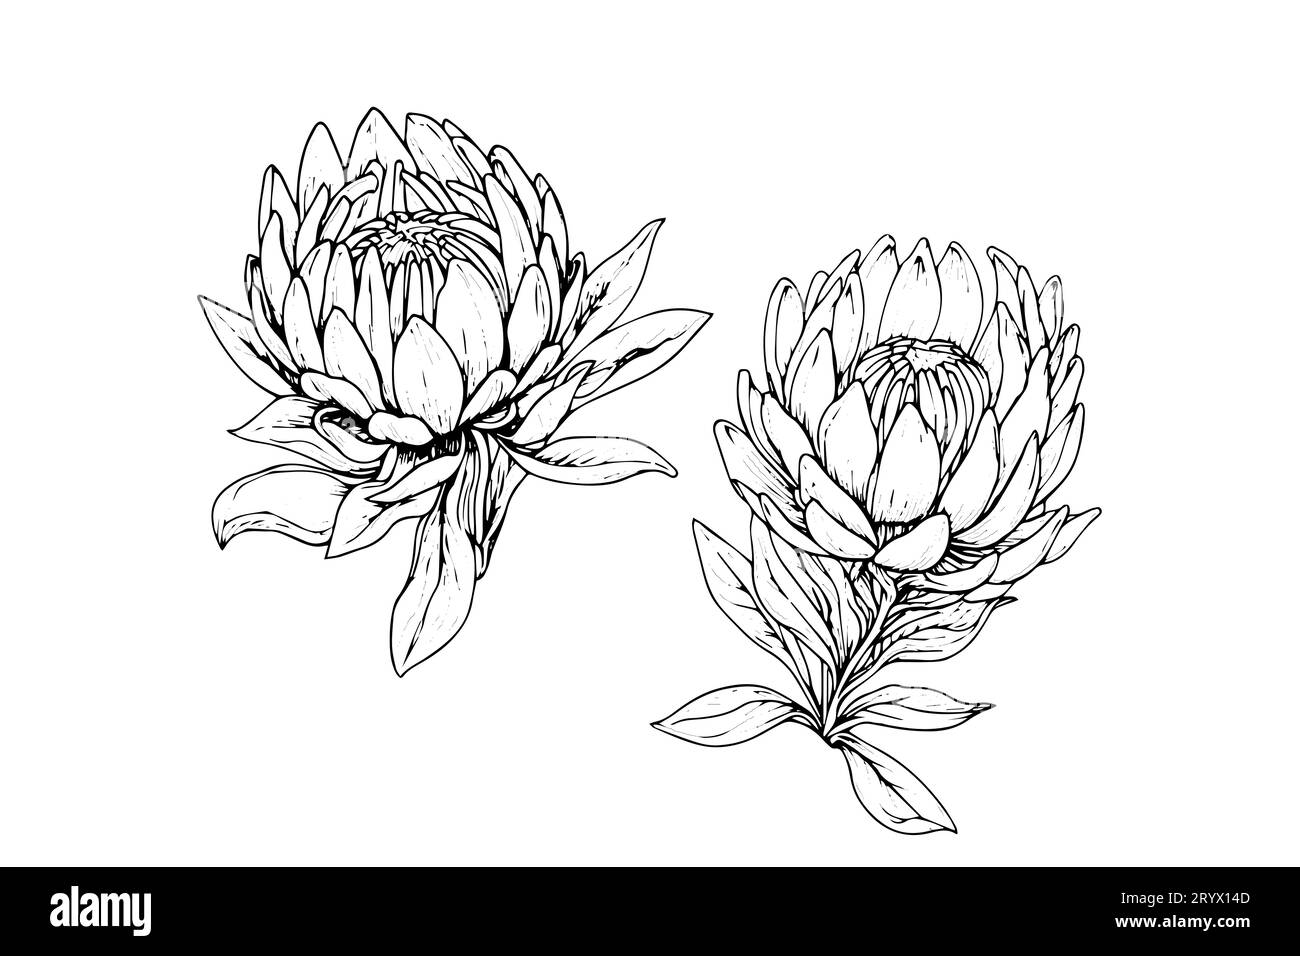 Elegant protea flower hand drawn ink sketch. Engraving style vector illustration. Stock Vector